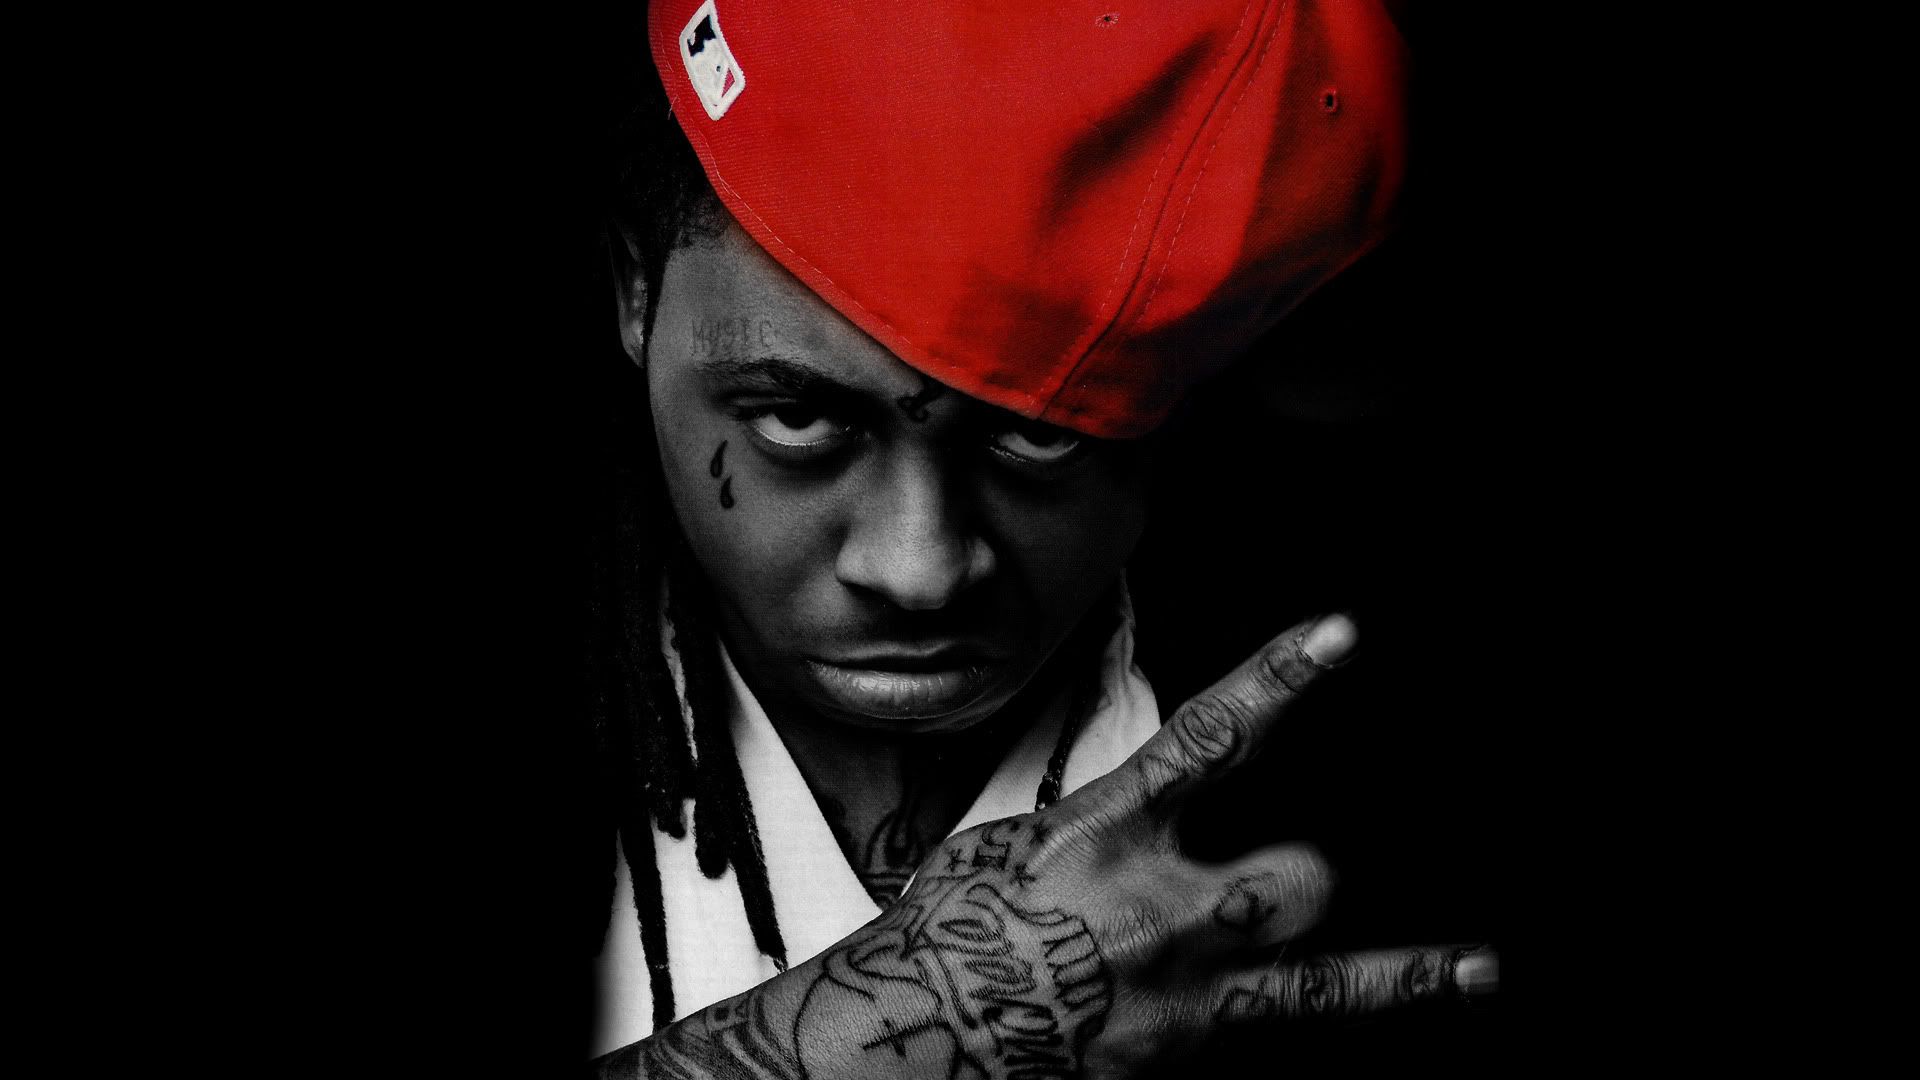 Fonds d'écran Lil Wayne : tous les wallpapers Lil Wayne